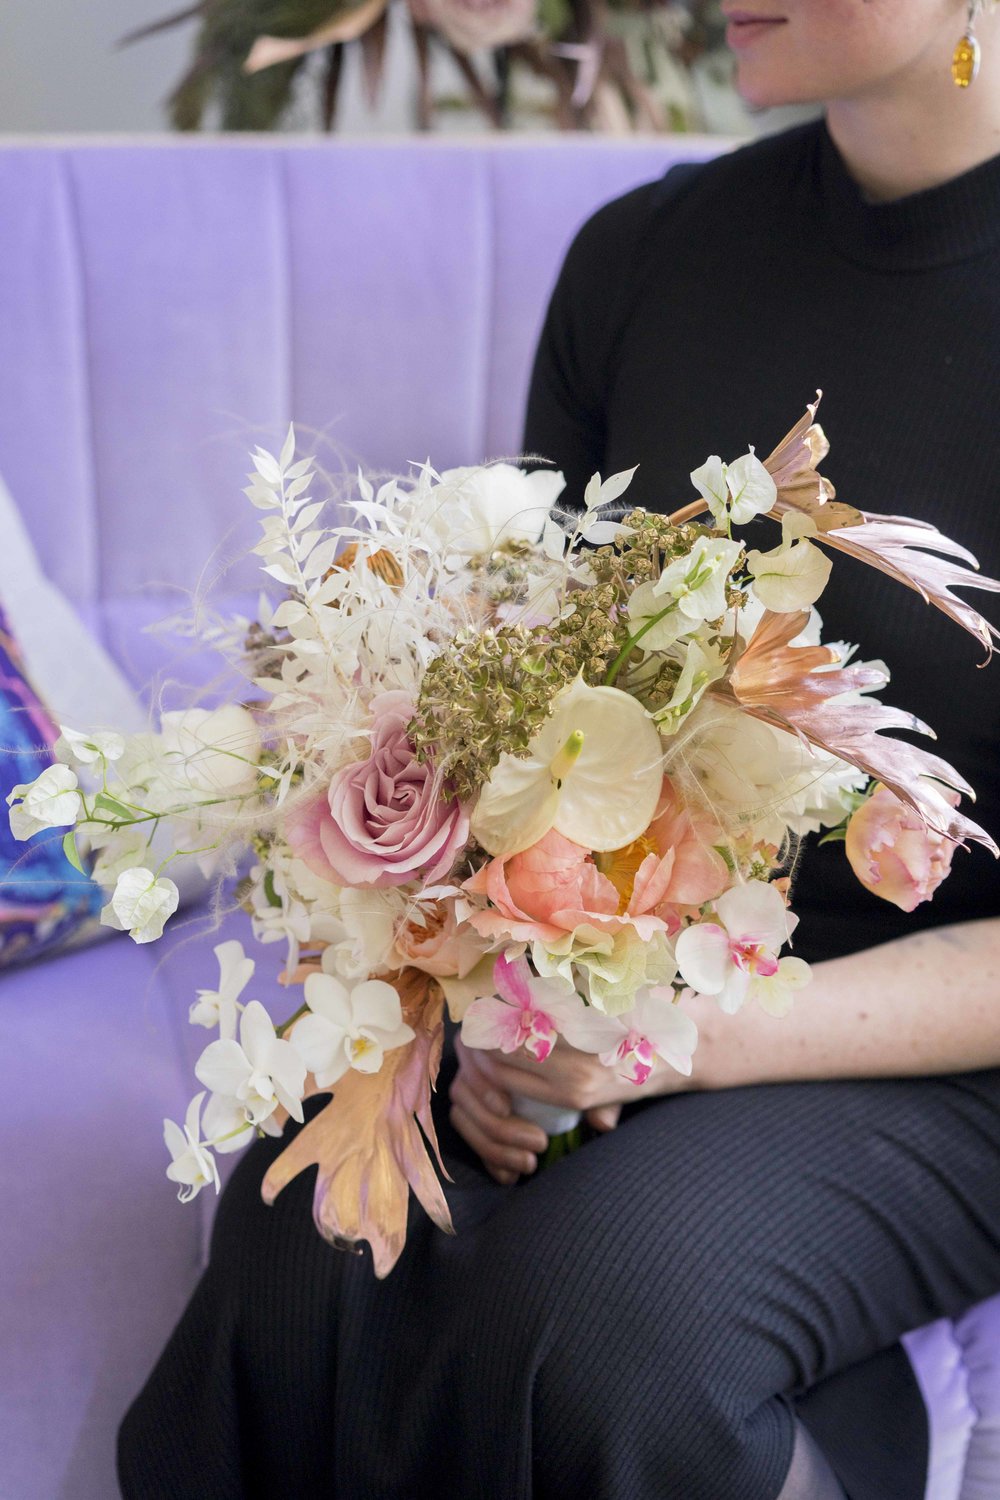 #apbloem #florist #bloemist #amsterdam #bridalbouquet #bloemen #kerkstraat #trouwen #event #love #liefde #bloemen #flowers #wedding #bruiloft #dscolor #dsfloral #weddingstyling #peony #styling #bruidsboeket